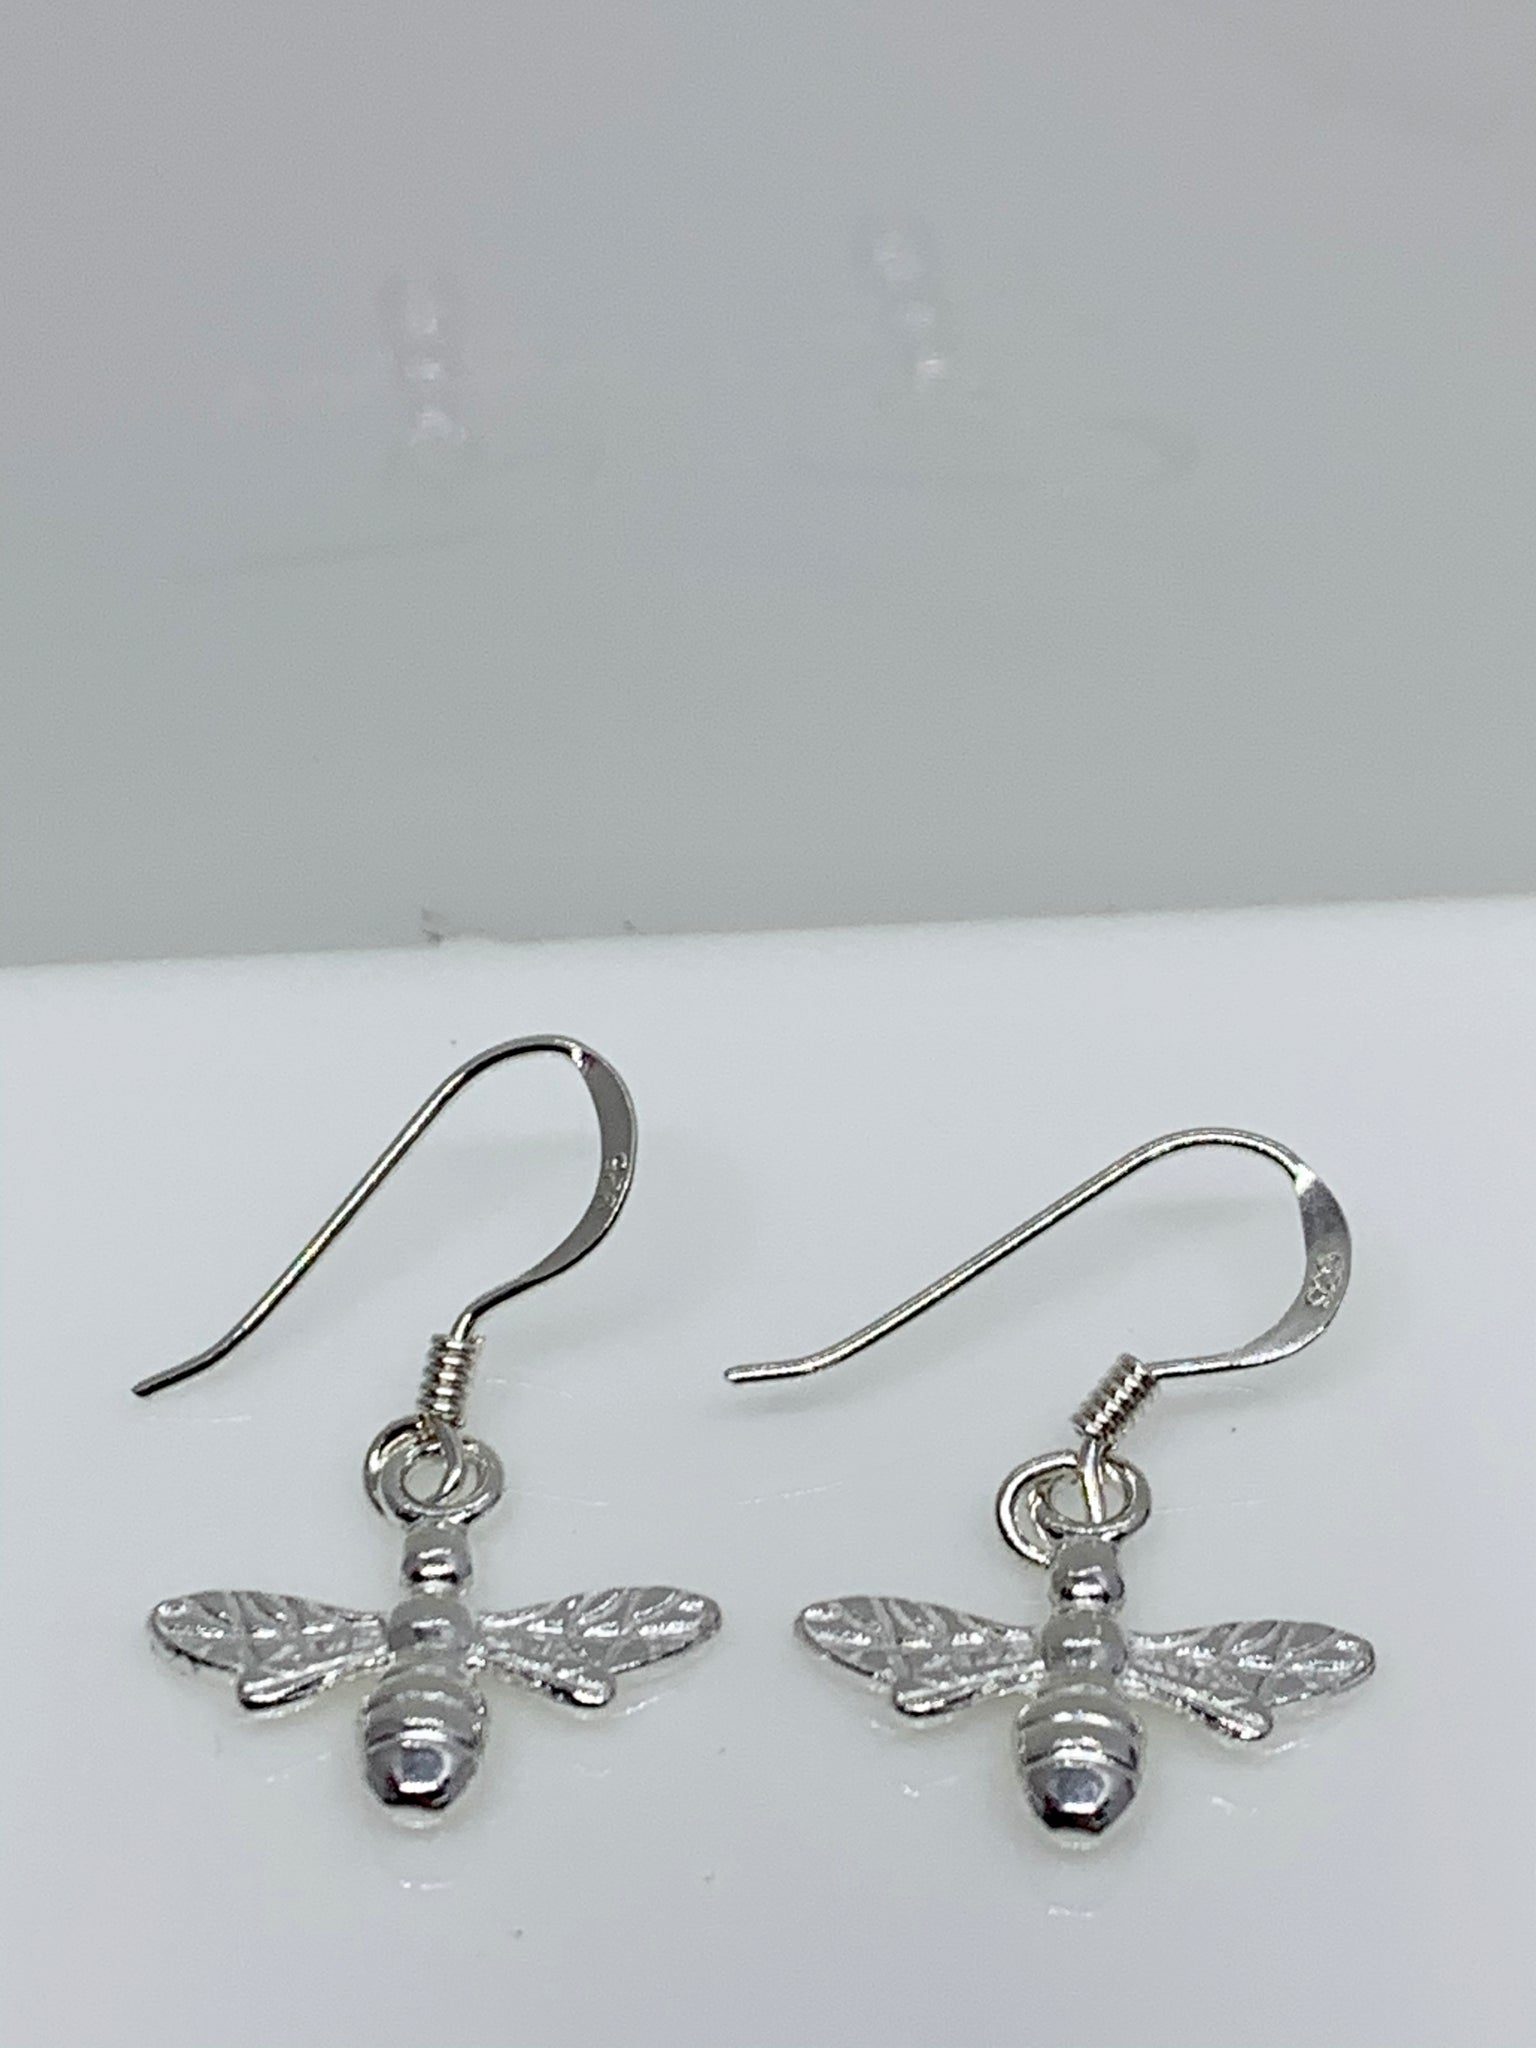 Dangly Silver Bee Earrings from Pixi Daisy